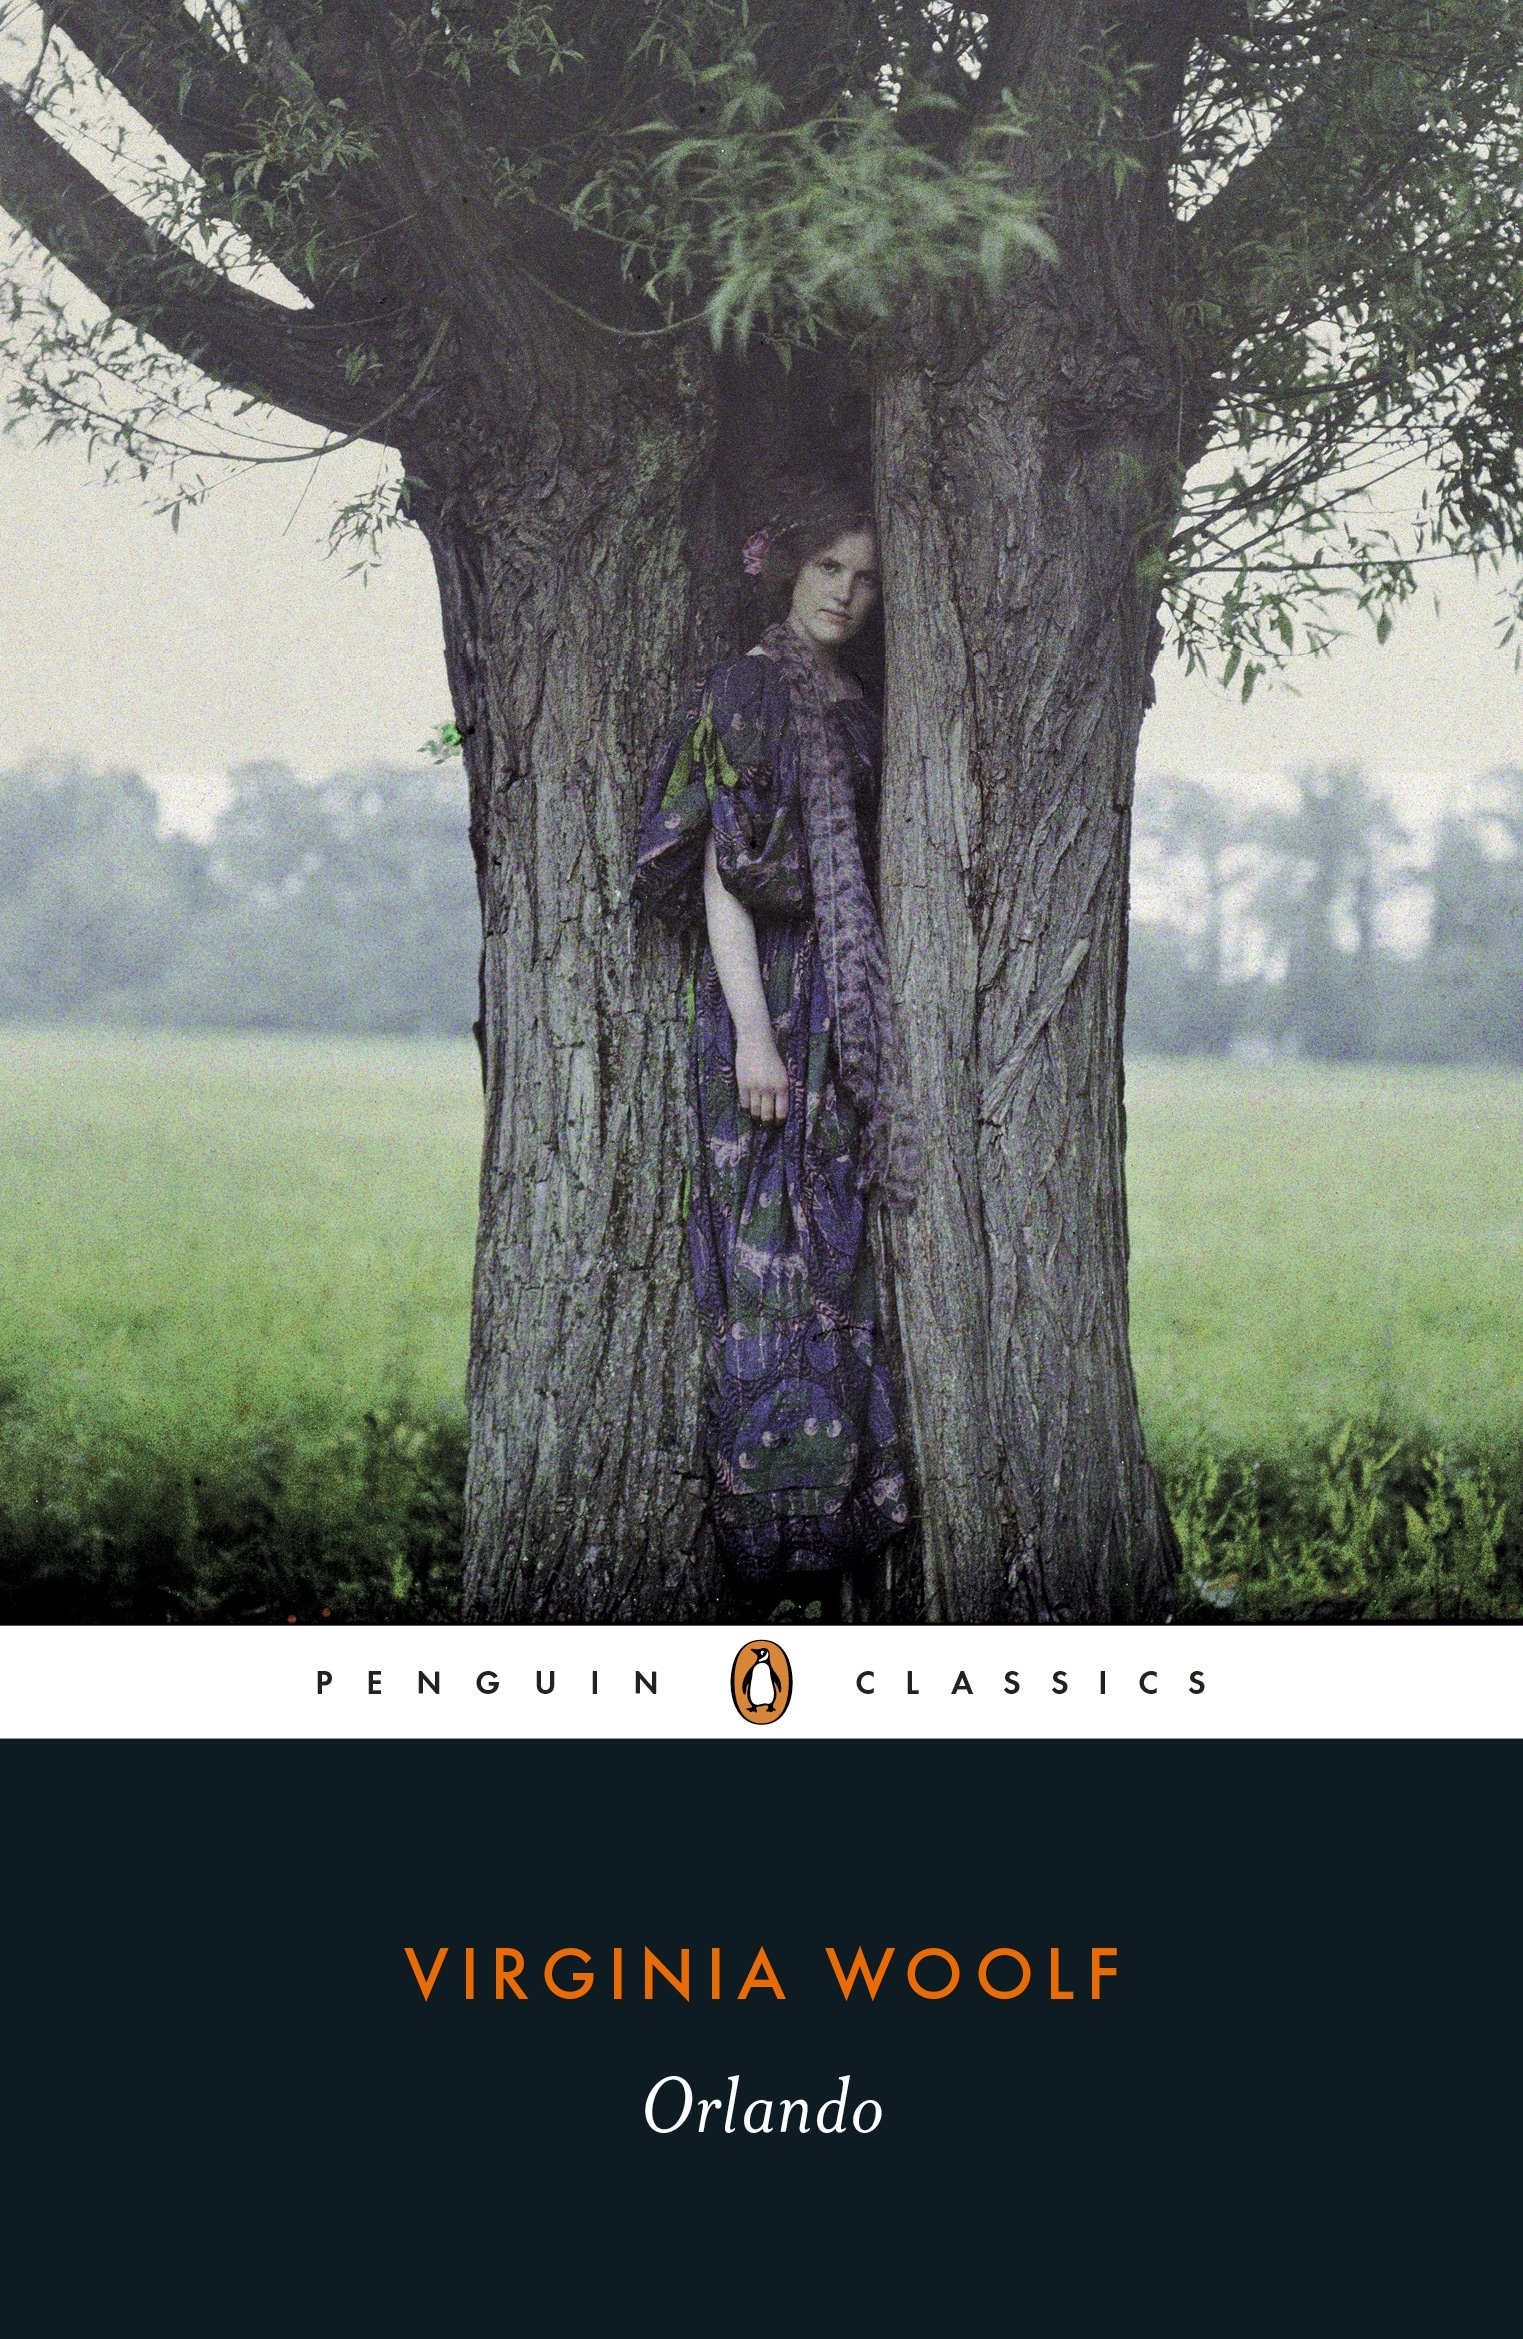 Book “Orlando” by Virginia Woolf — March 7, 2019